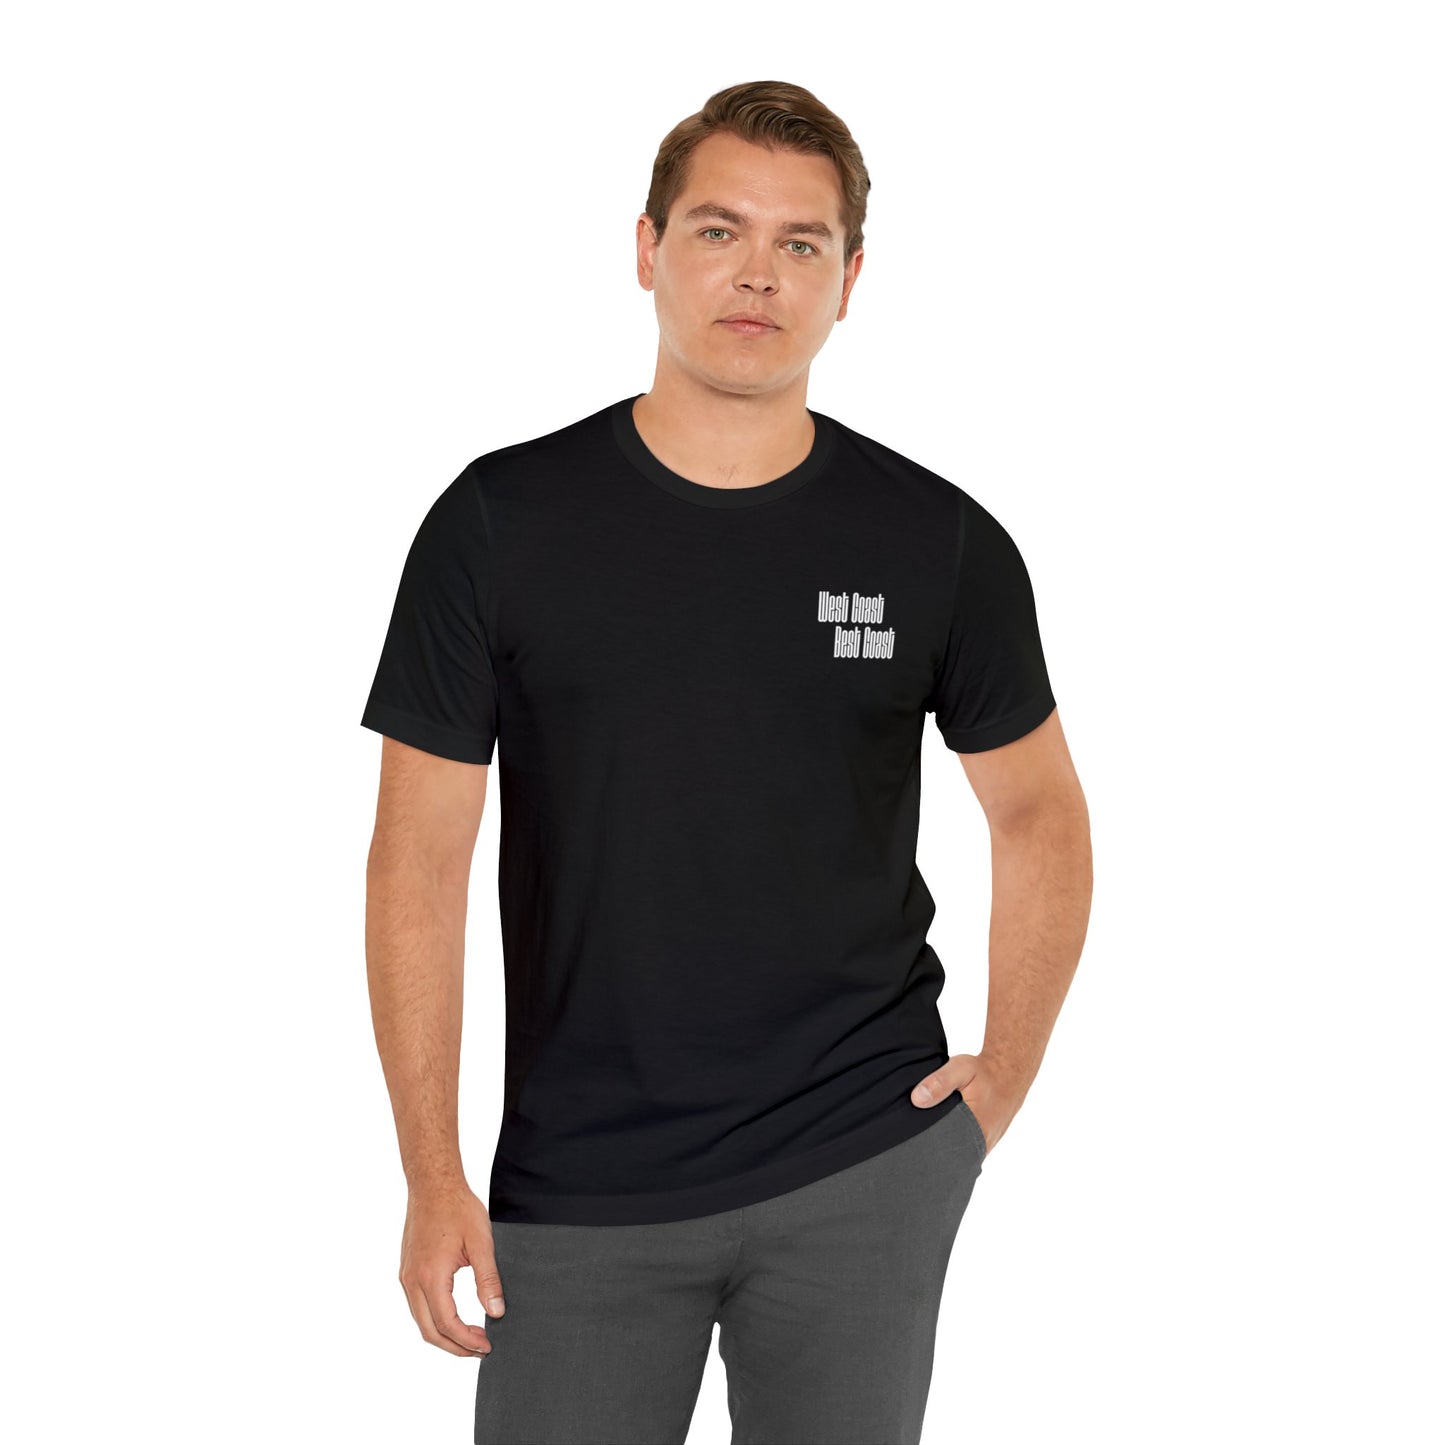 West Coast - Best Coast Men's T-Shirt